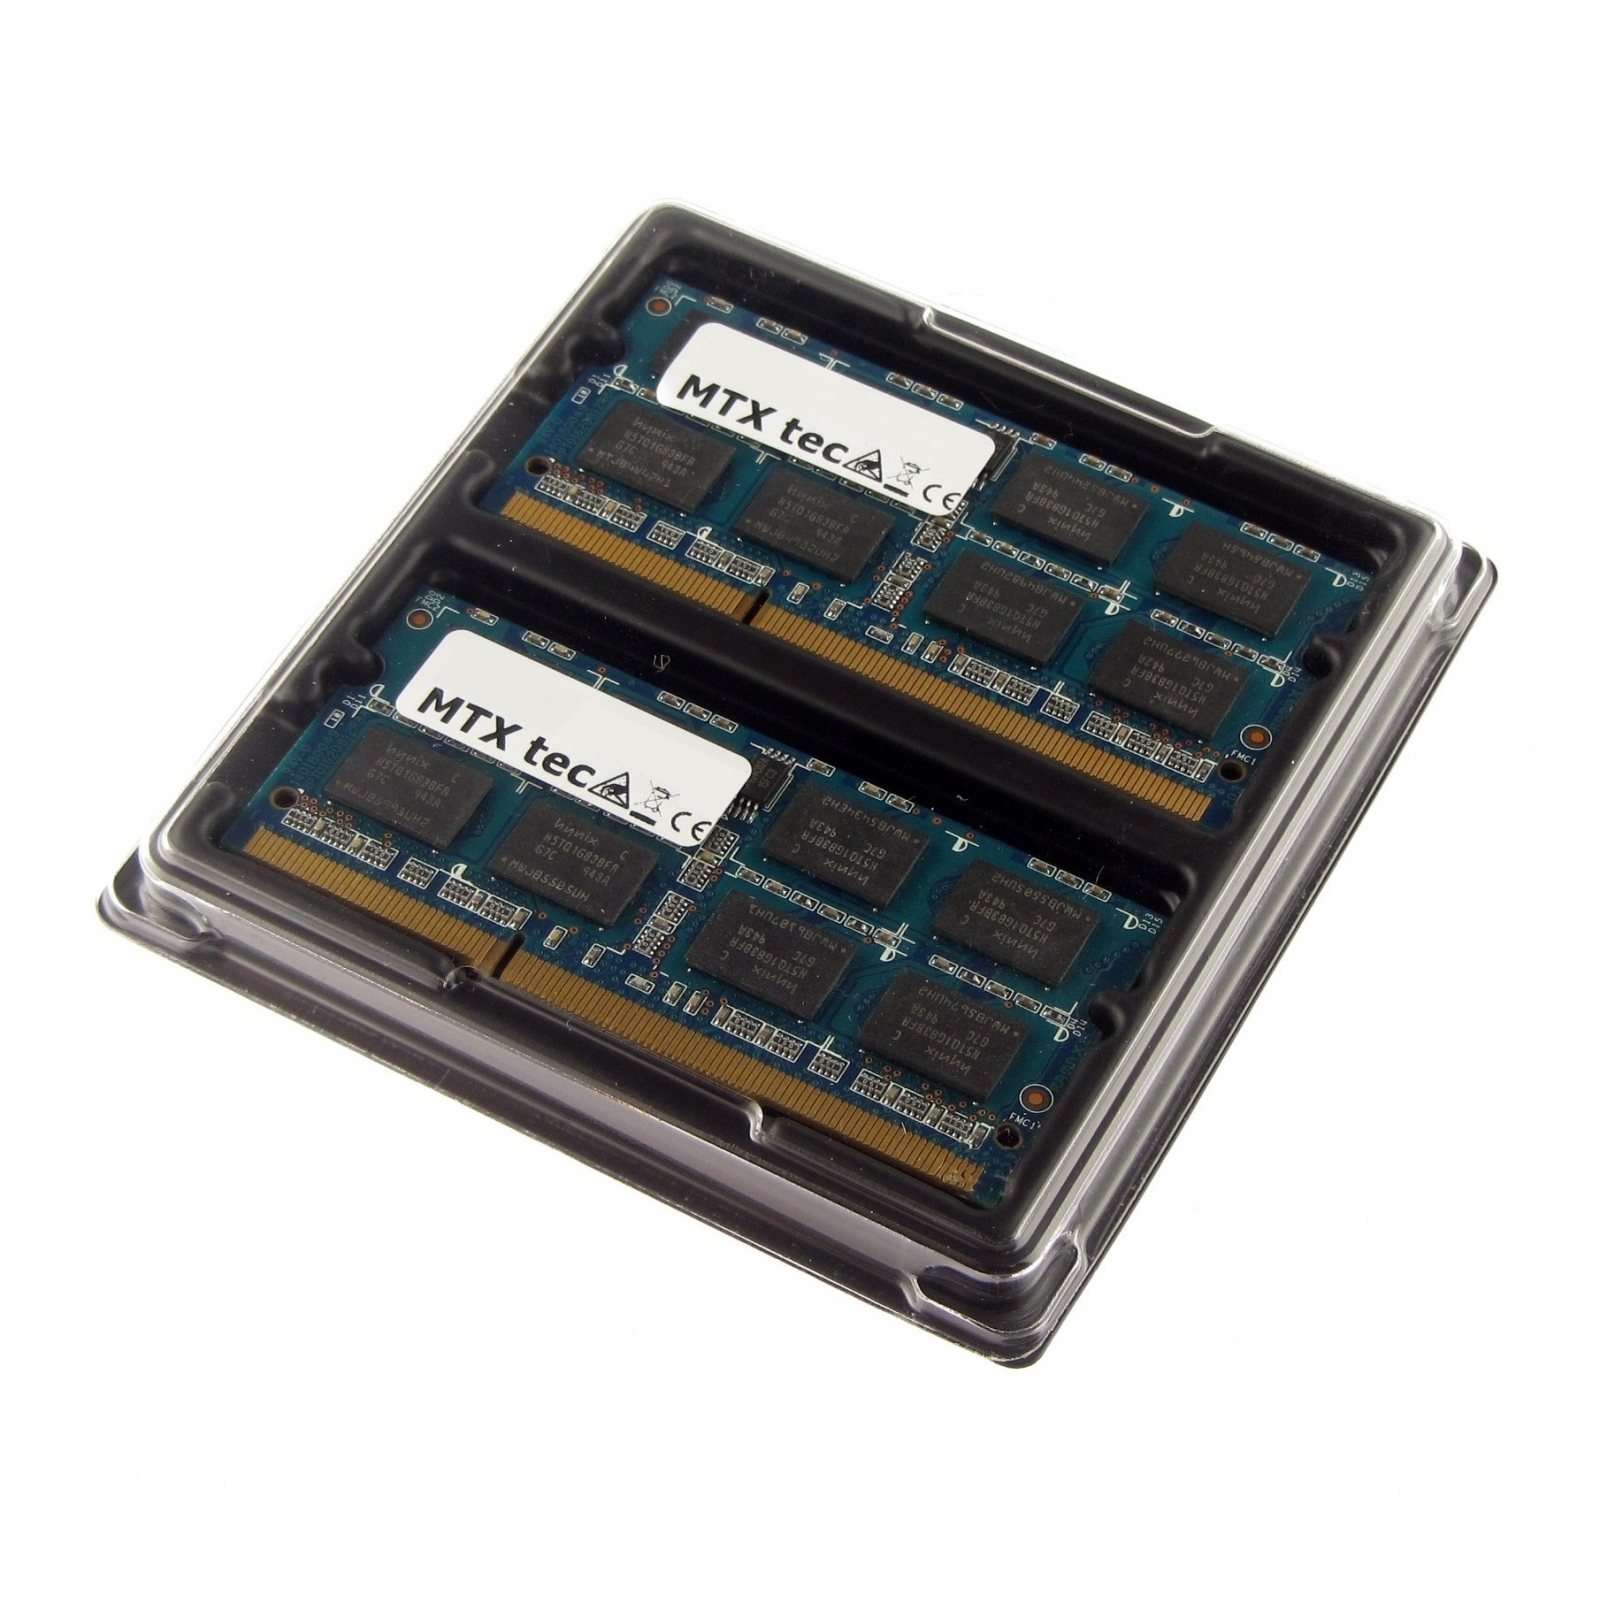 MTXTEC 4GB 2 Kit DDR3 DDR3 RAM 2x 204 DDR3 1333MHz GB 2GB SODIMM Notebook-Speicher Pin Laptop-Speicher PC3-10600